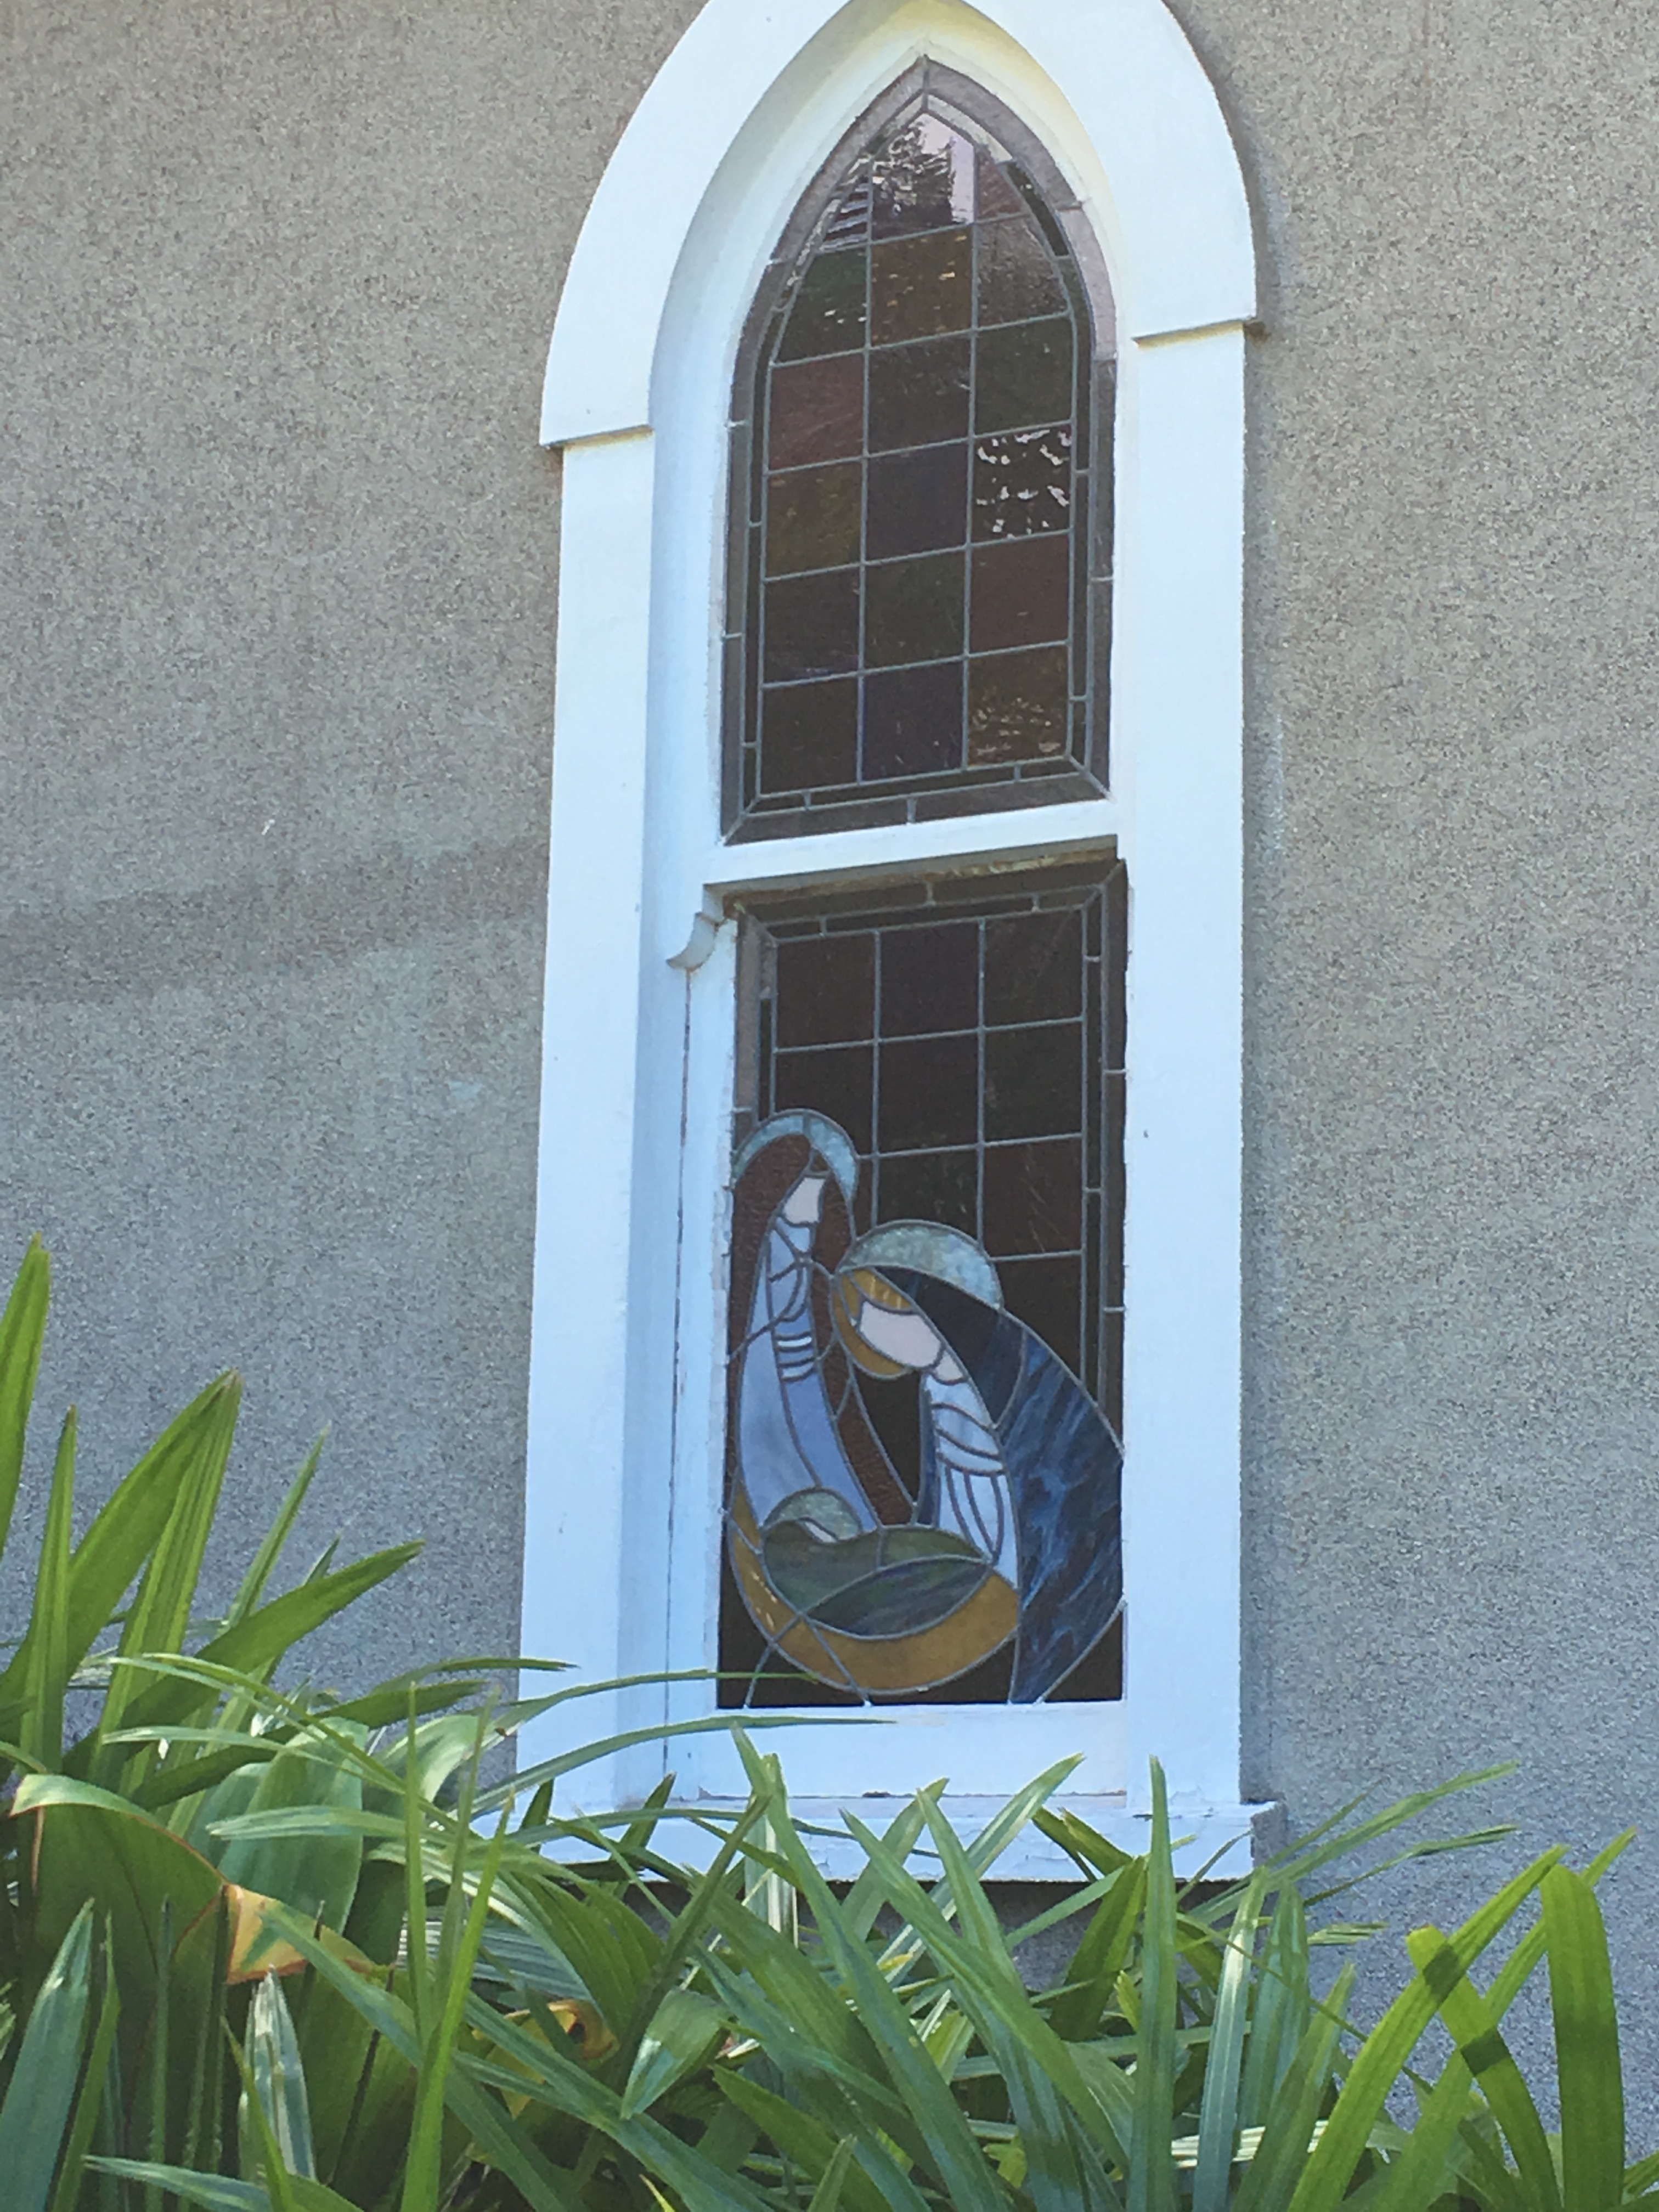 Exterior view of the Nativity window in Christ Church, Kealakekua, Hawaii